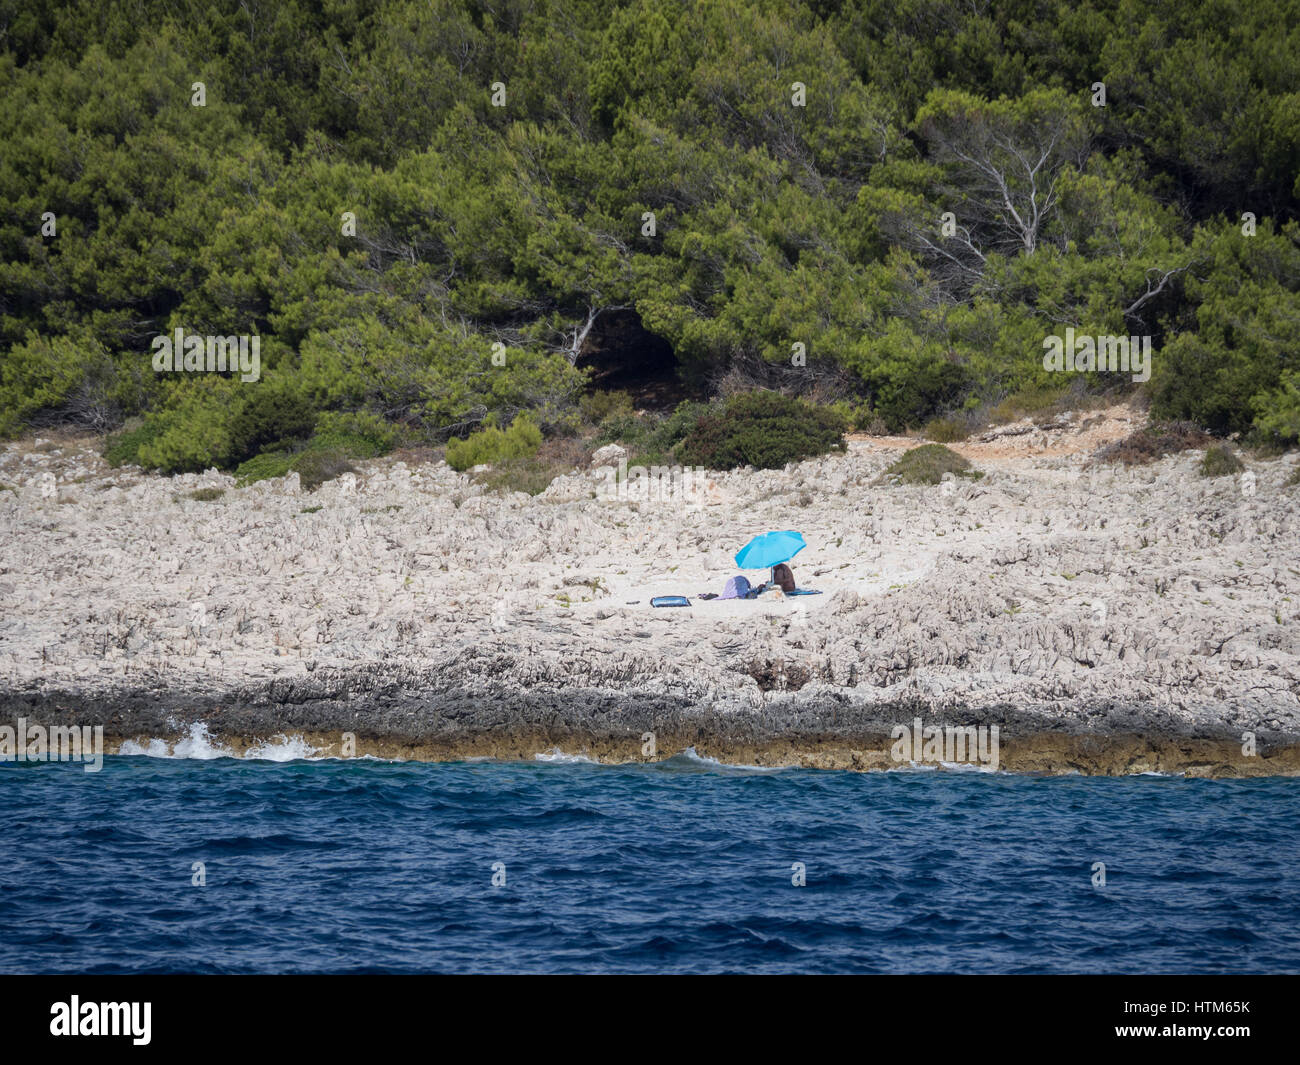 a lone single one sunbather alone on an isolated stony shingle rocky beach under the shade of a blue parasol umbrella in south Croatia Stock Photo